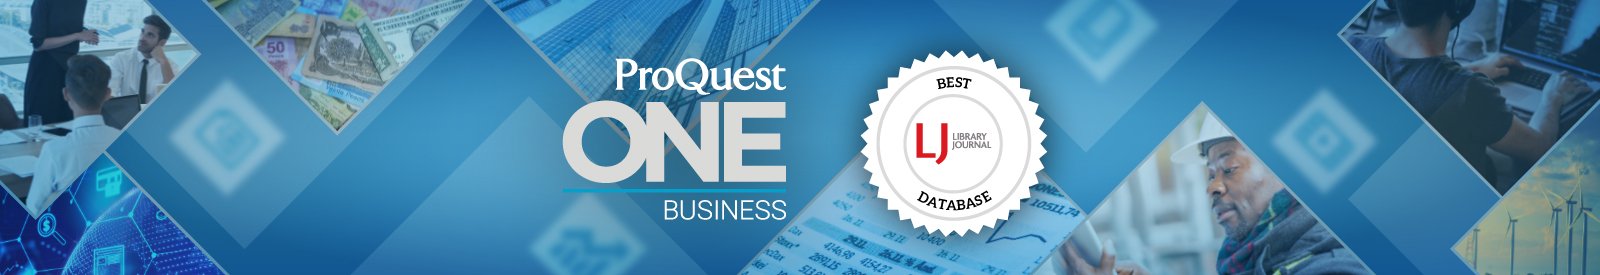 ProQuest One Business: “新产品之最” 来自Charleston Advisor的评价